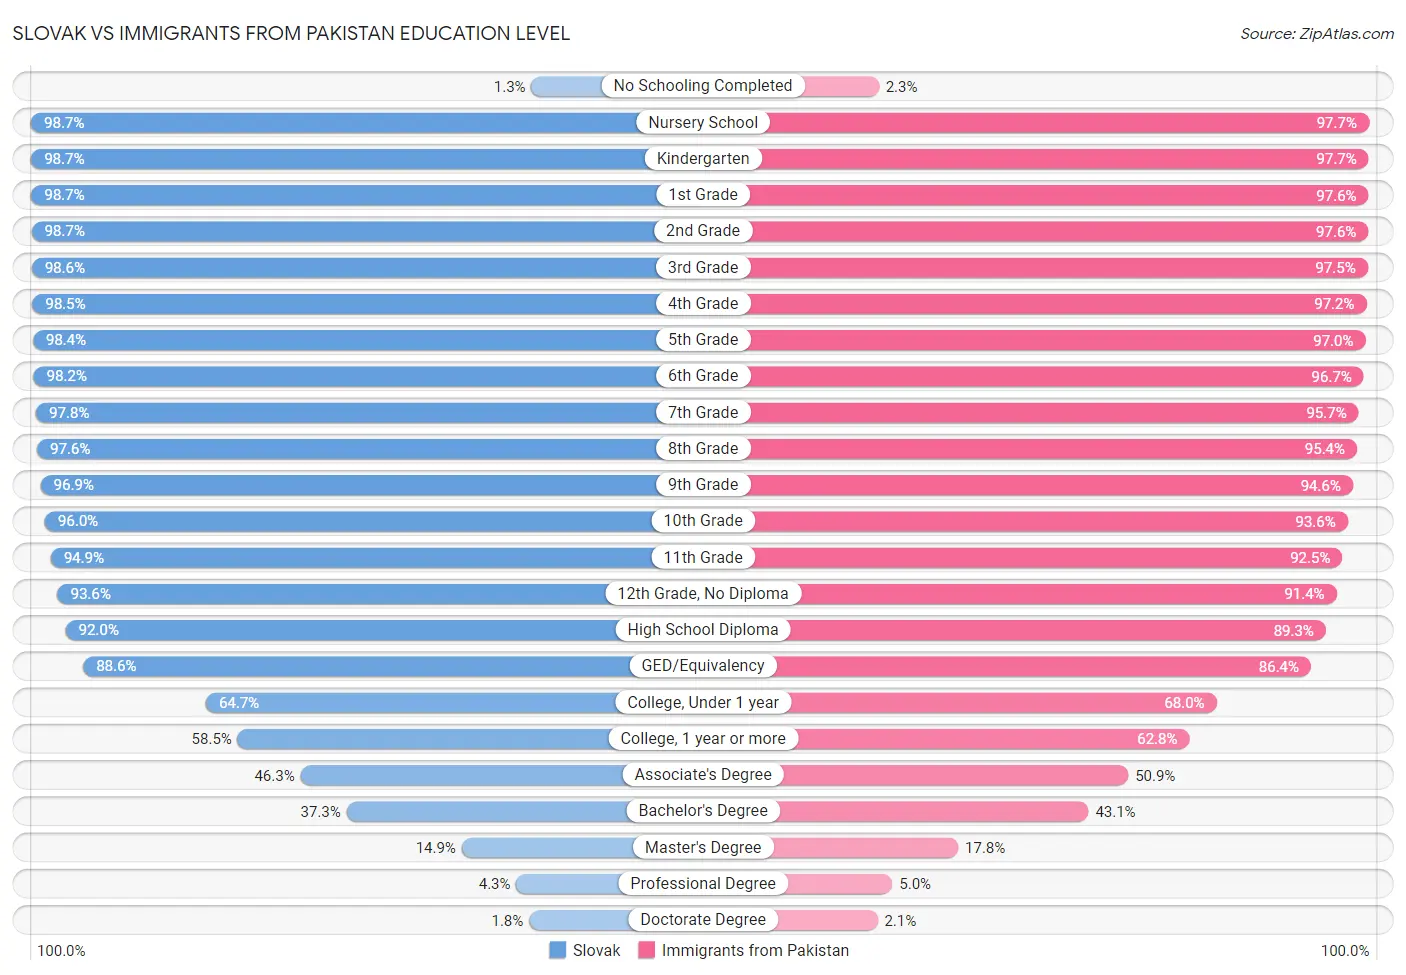 Slovak vs Immigrants from Pakistan Education Level